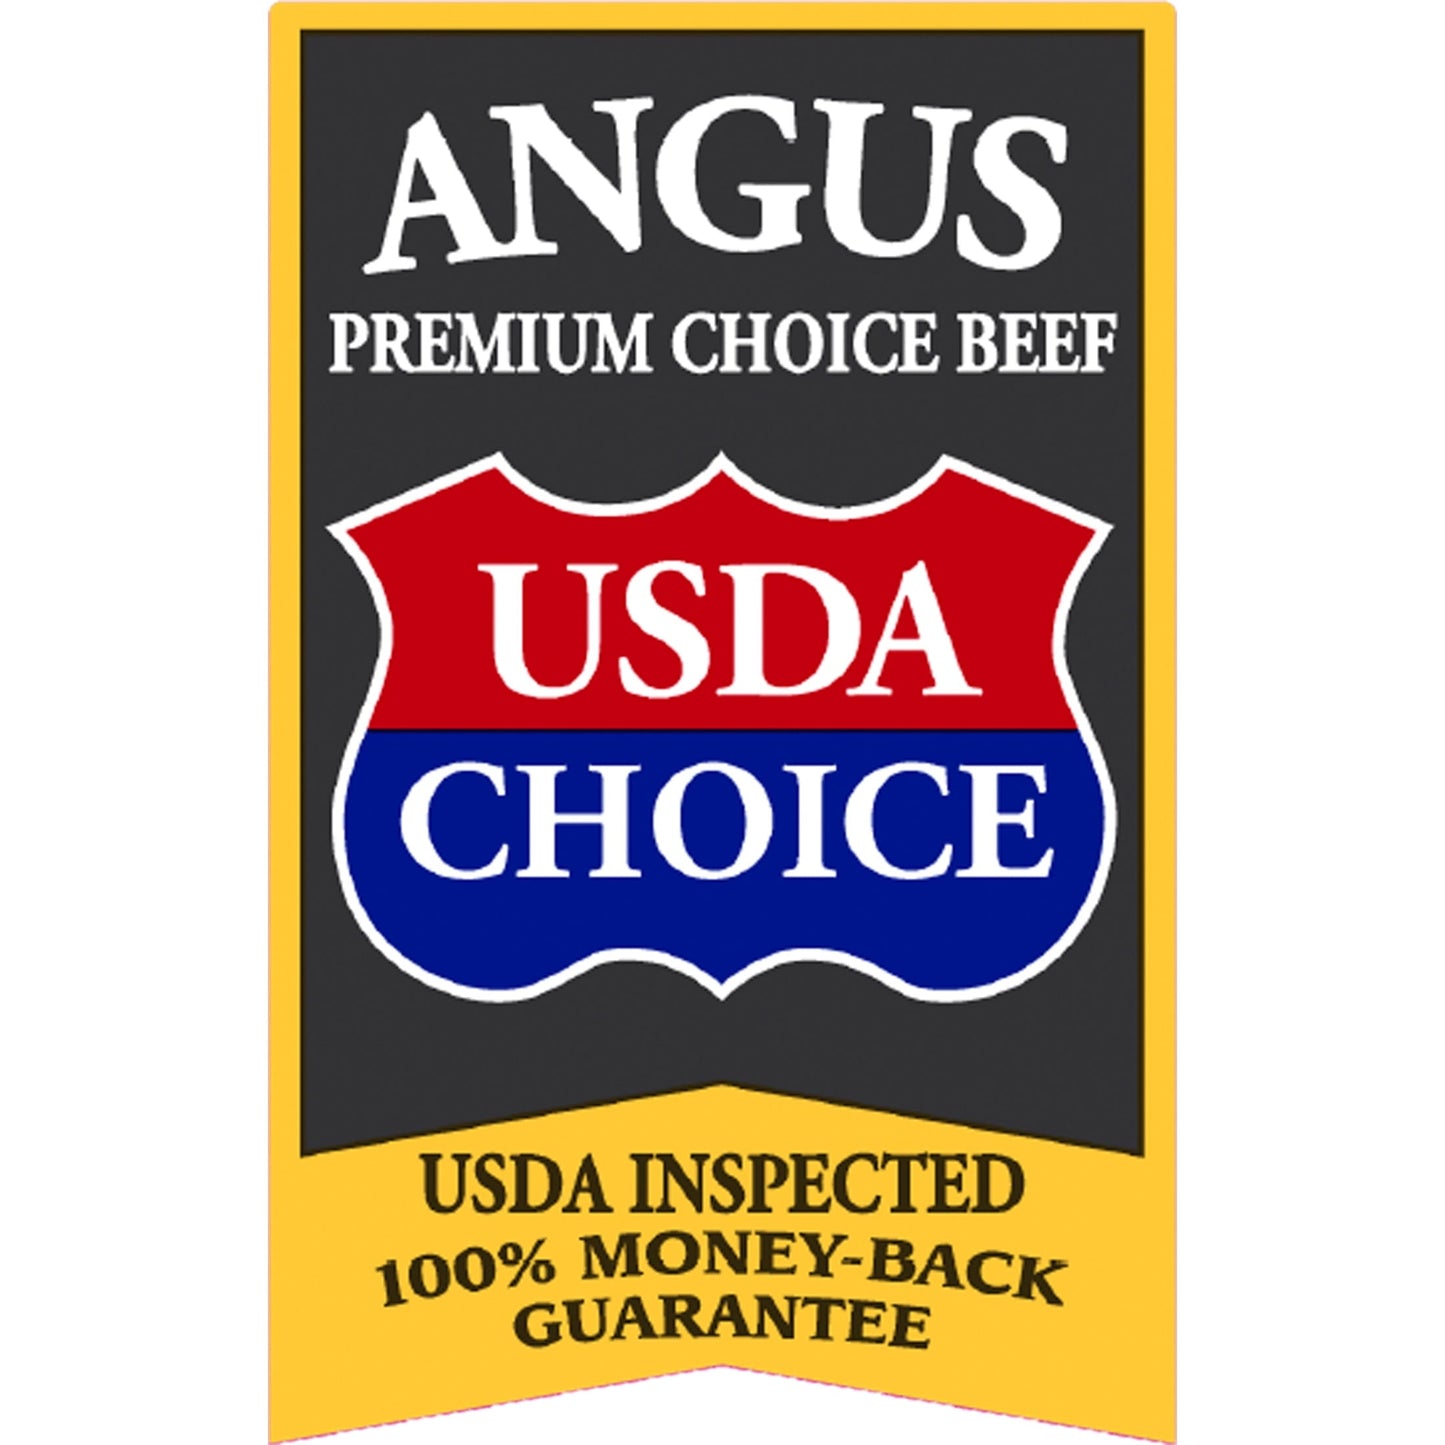 Beef Choice Angus Ribeye Steak Thin, 0.43 - 1.68 lb Tray